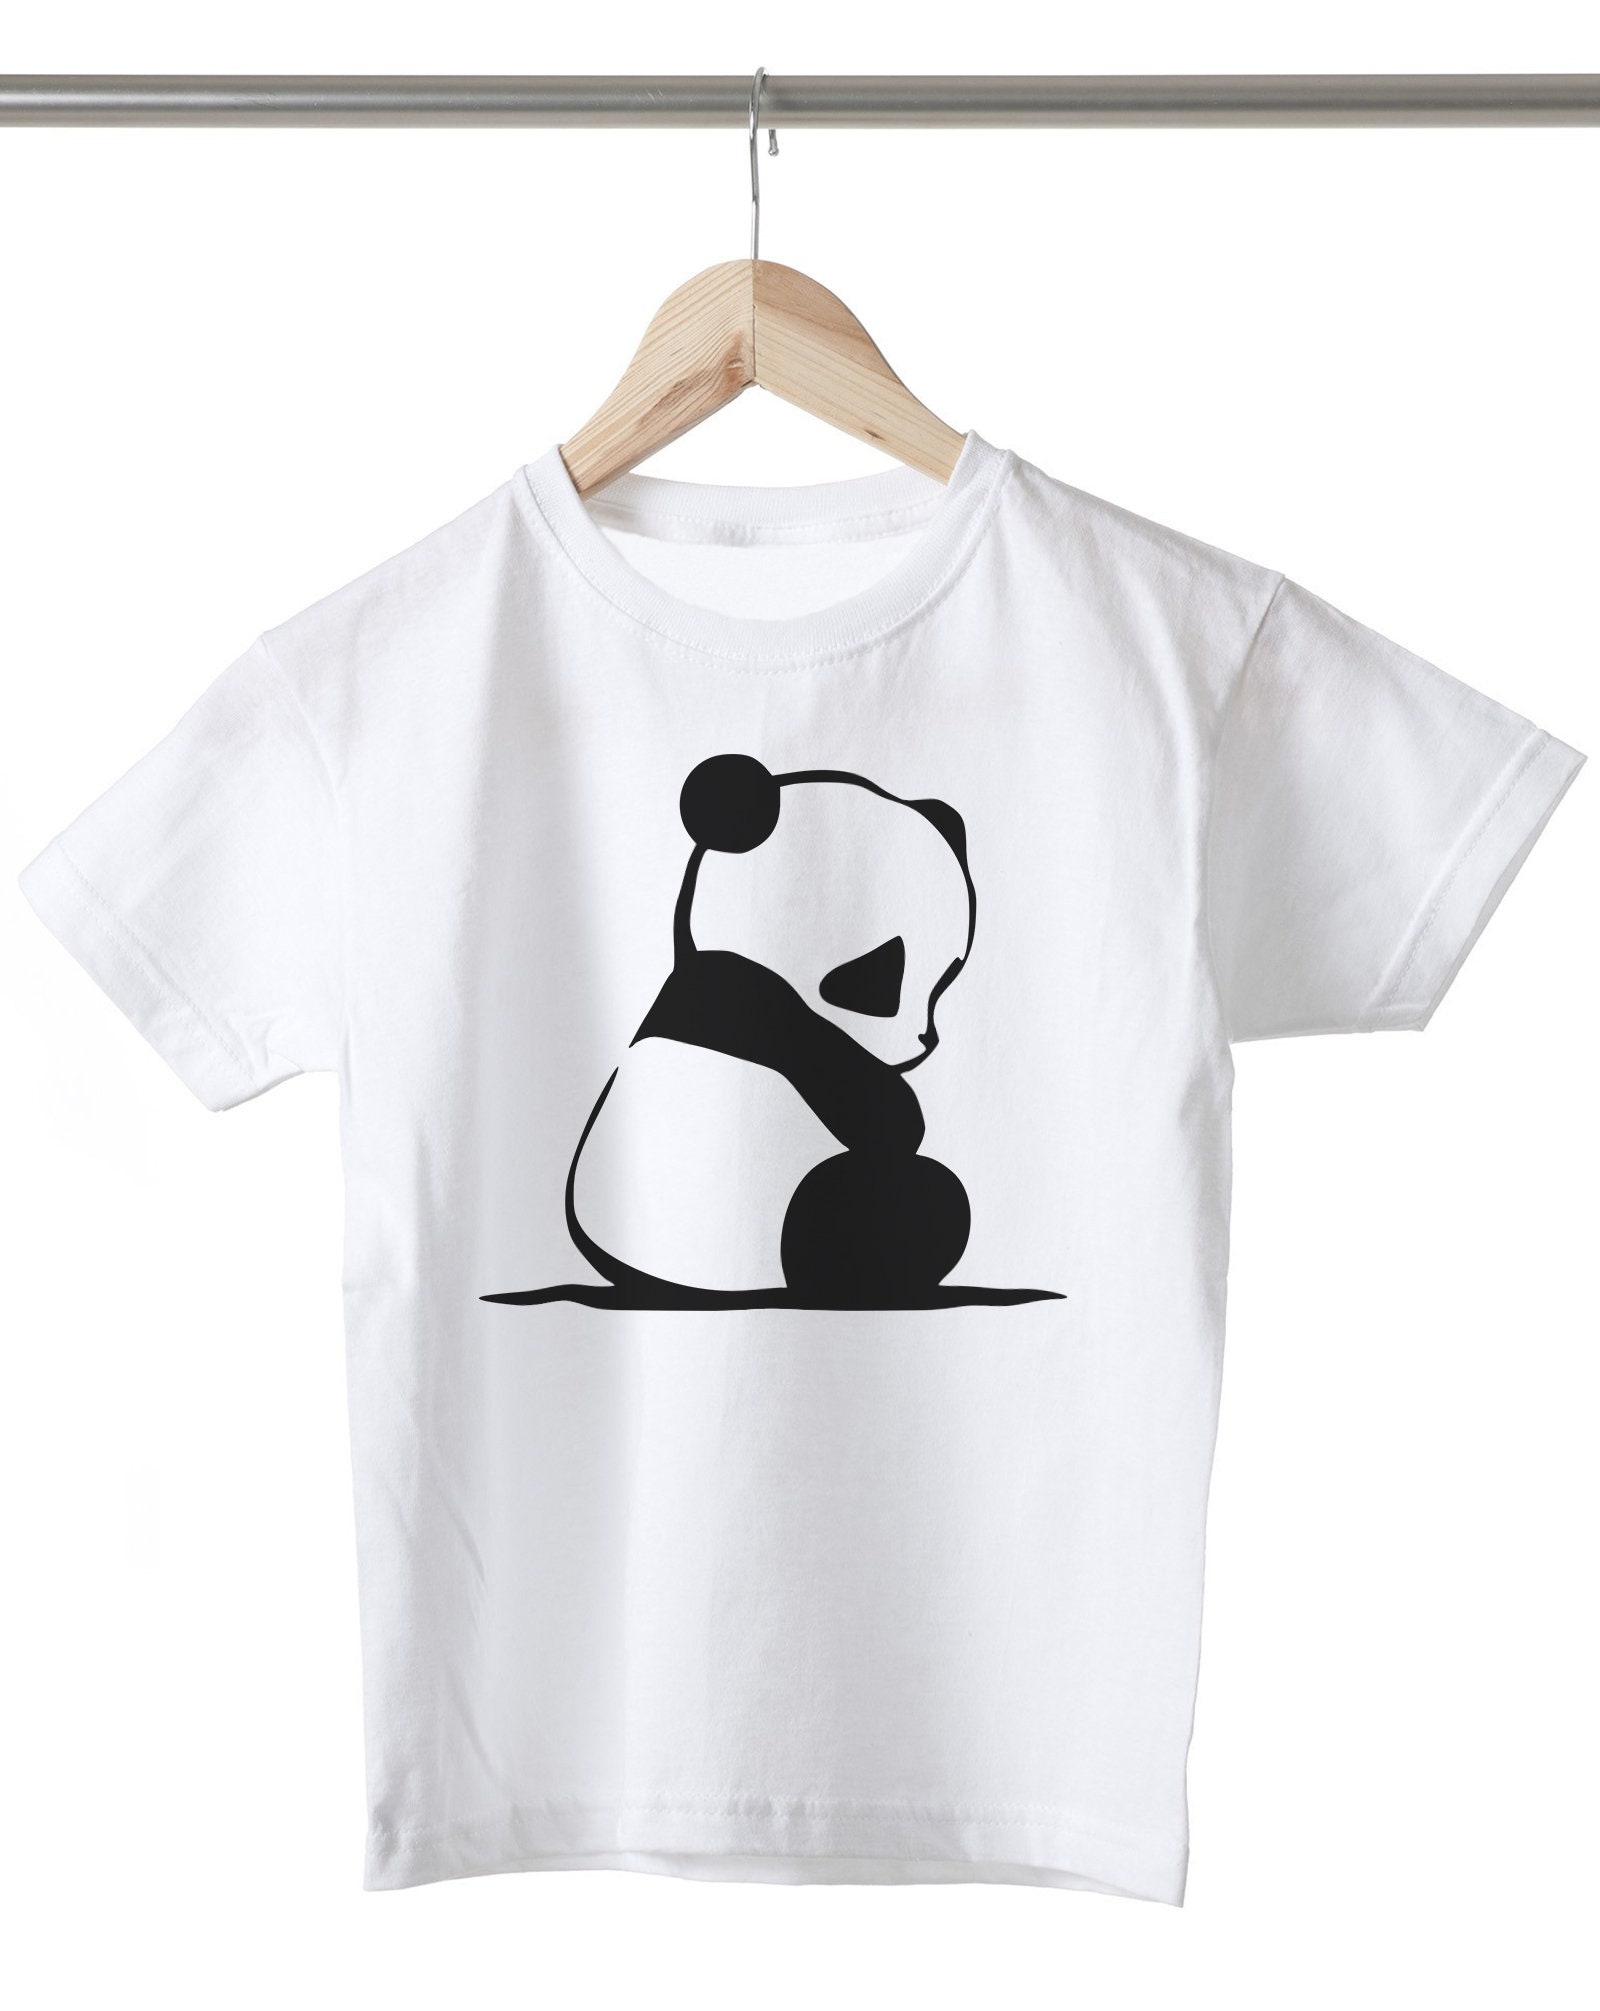 Stencil Panda Cute Cartoon Printed Girls Cotton - Animal Tee Unisex Top T-shirt Kids White Trendy Boys Etsy Nature